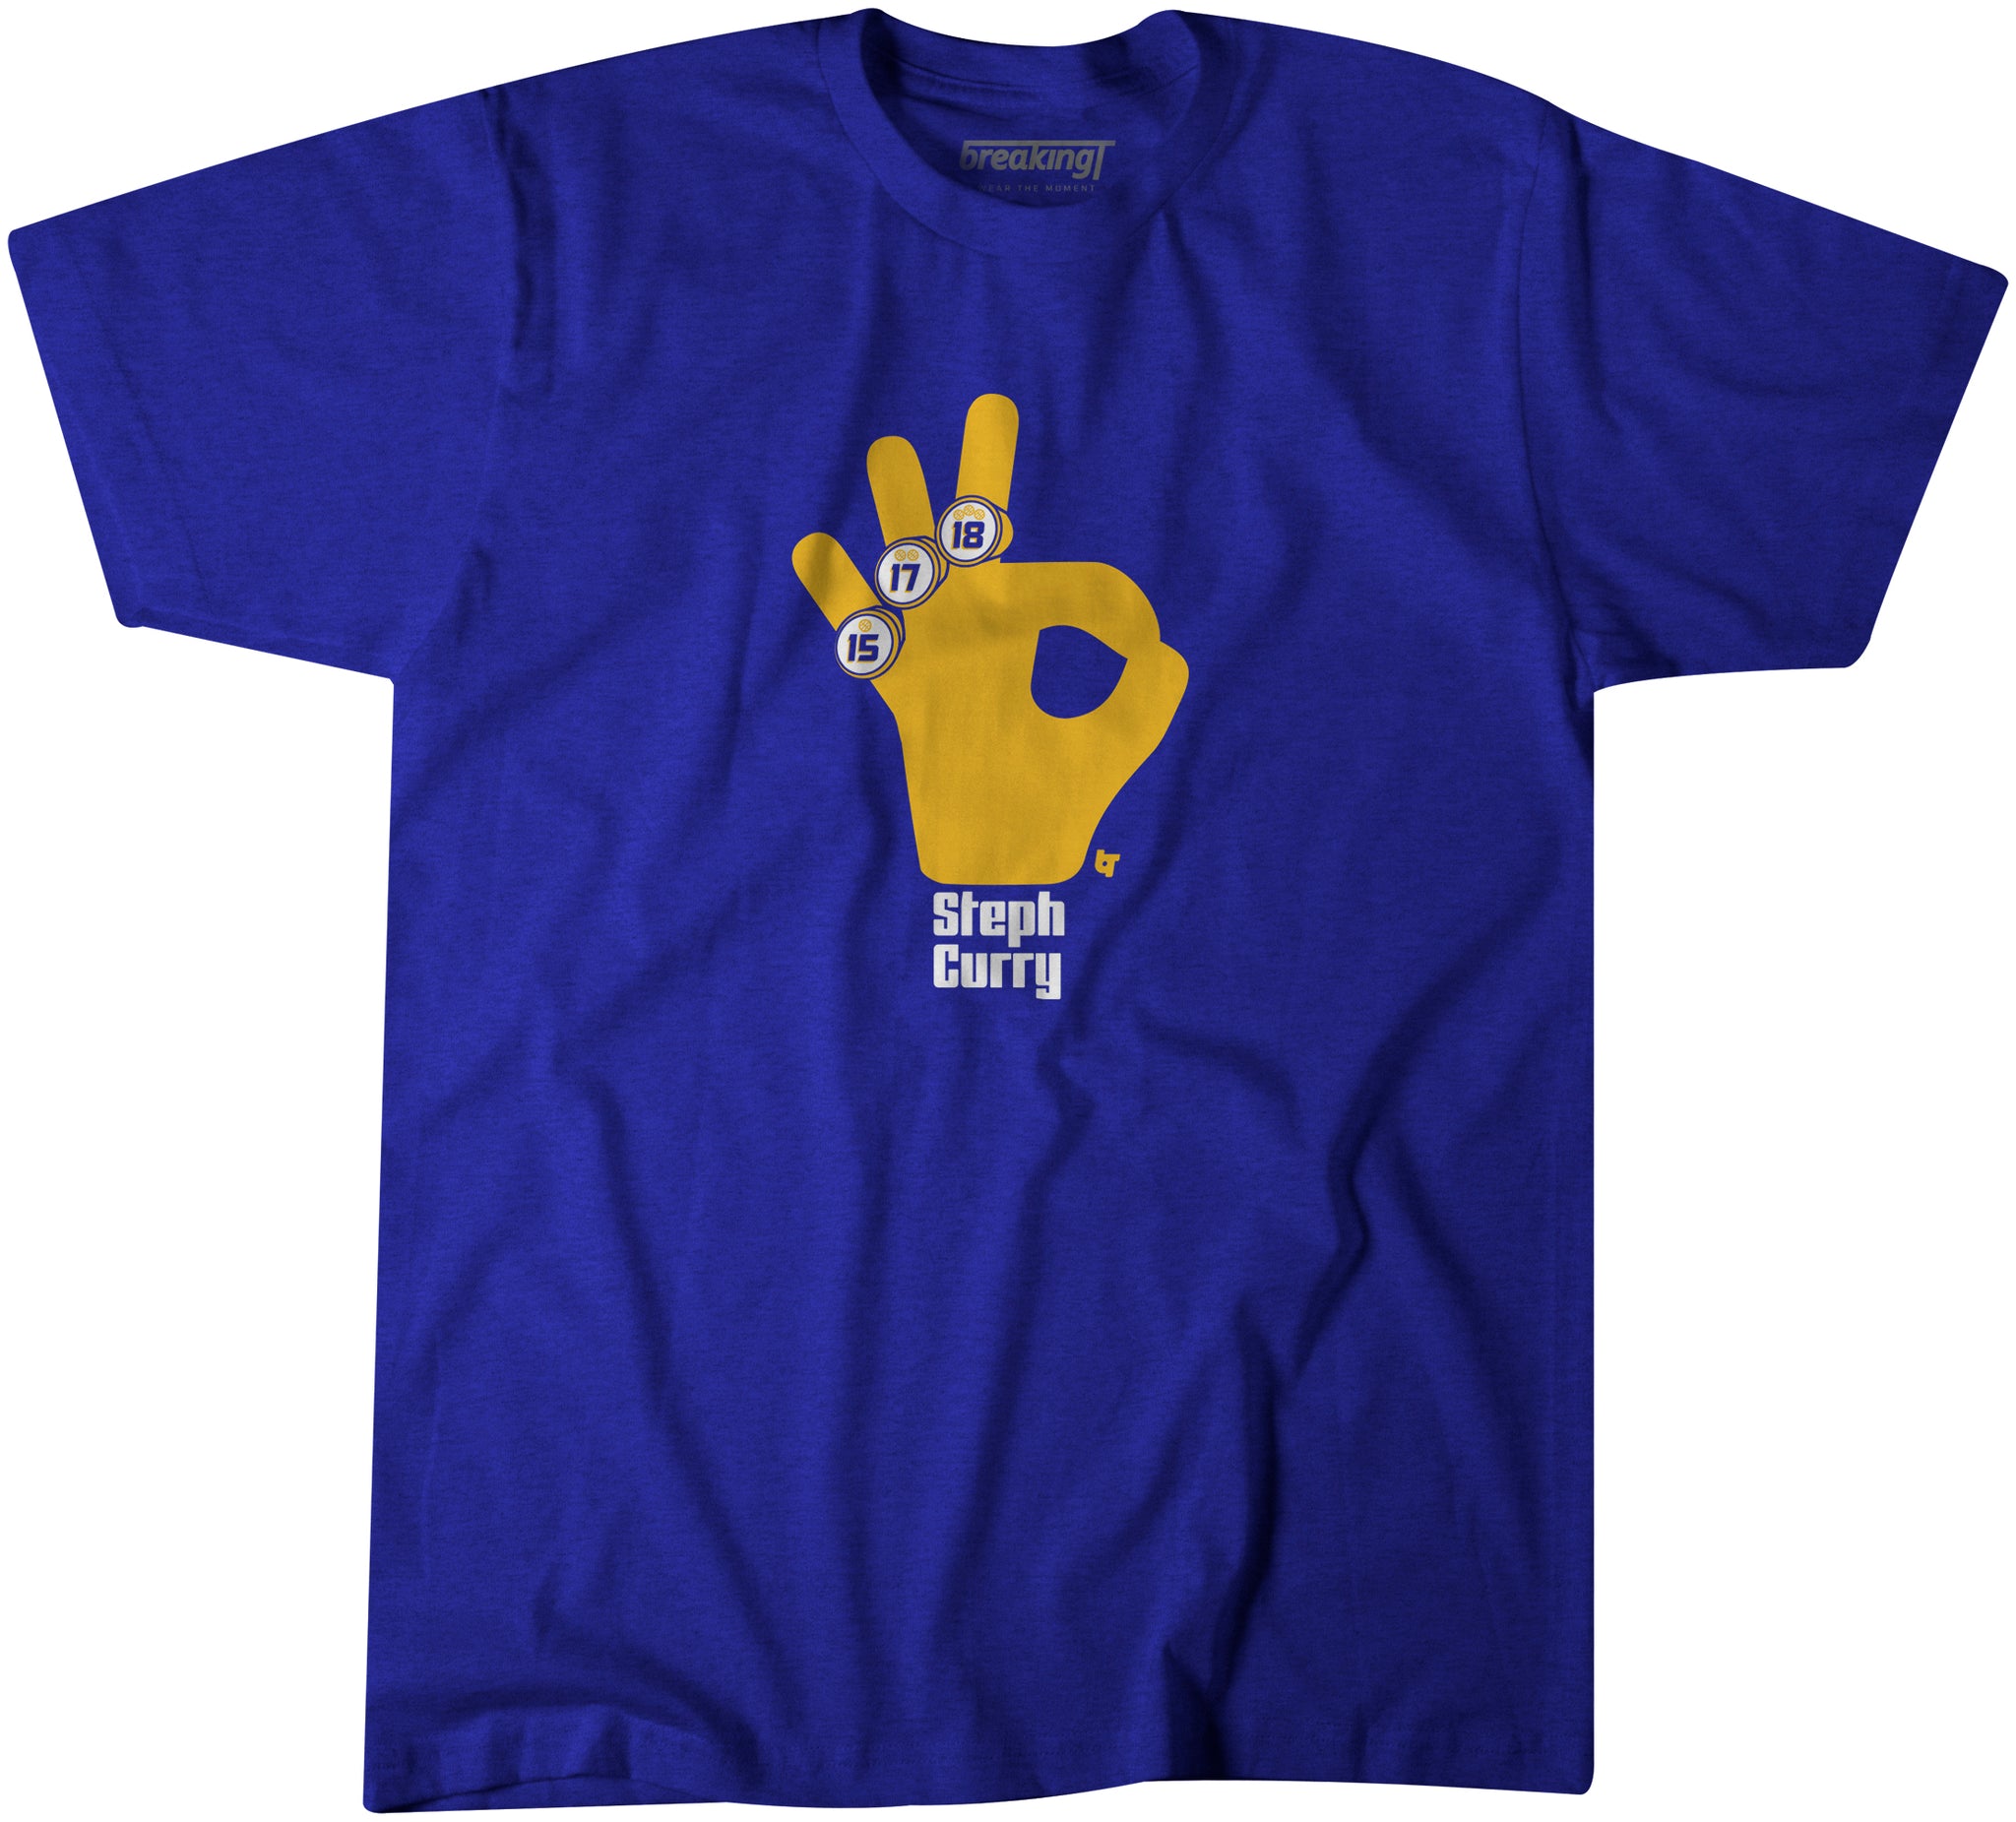 Steph Curry Shirt, Three Rings - BreakingT